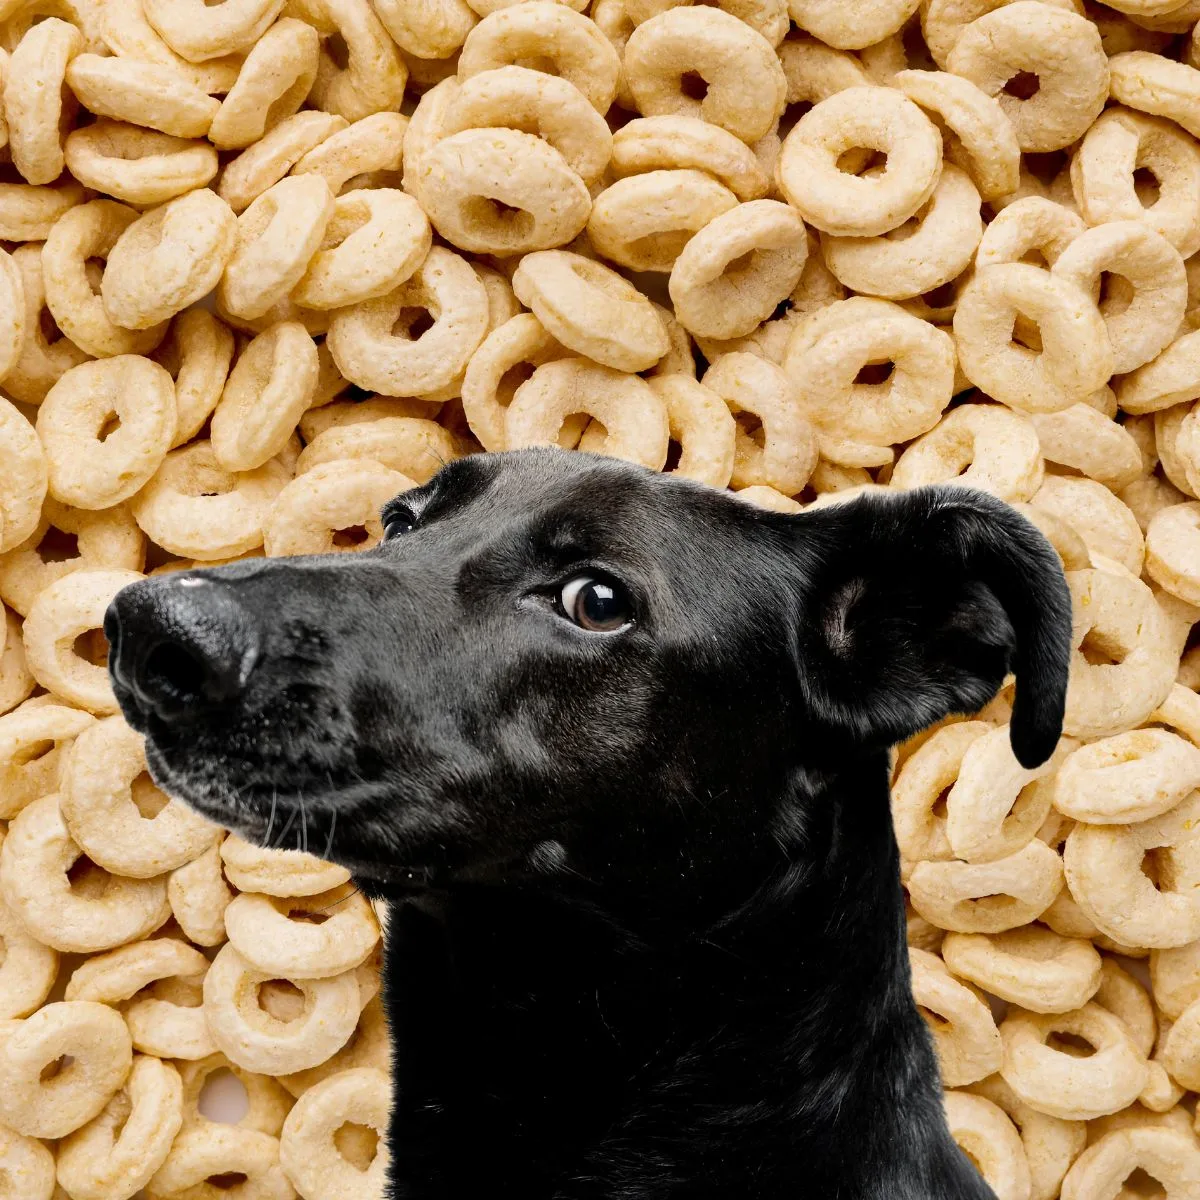 Black dog in front of many honey nut cheerios.